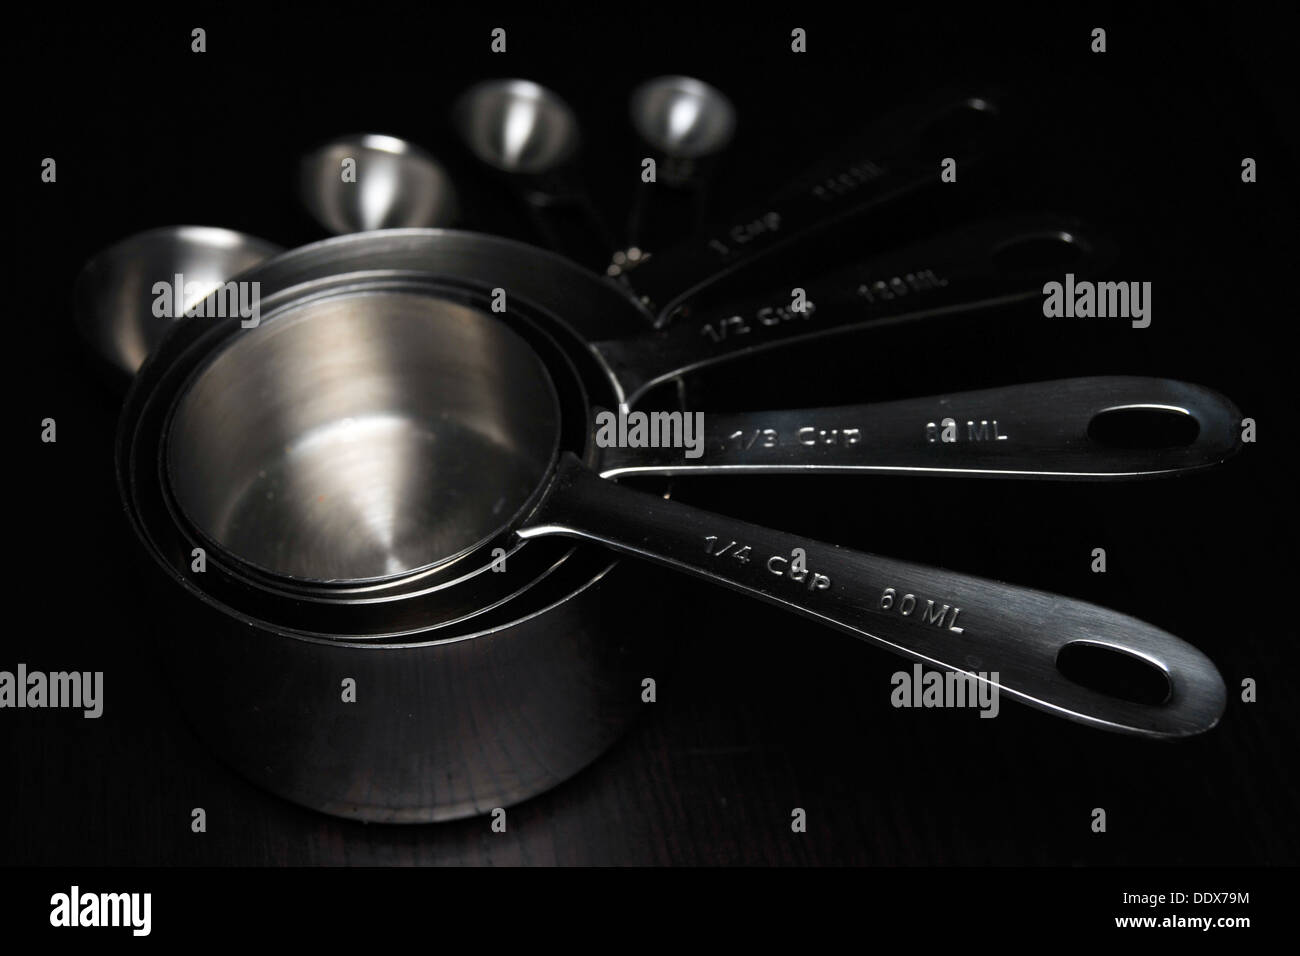 https://c8.alamy.com/comp/DDX79M/a-set-of-kitchen-measuring-cupsspoons-photographed-against-a-black-DDX79M.jpg